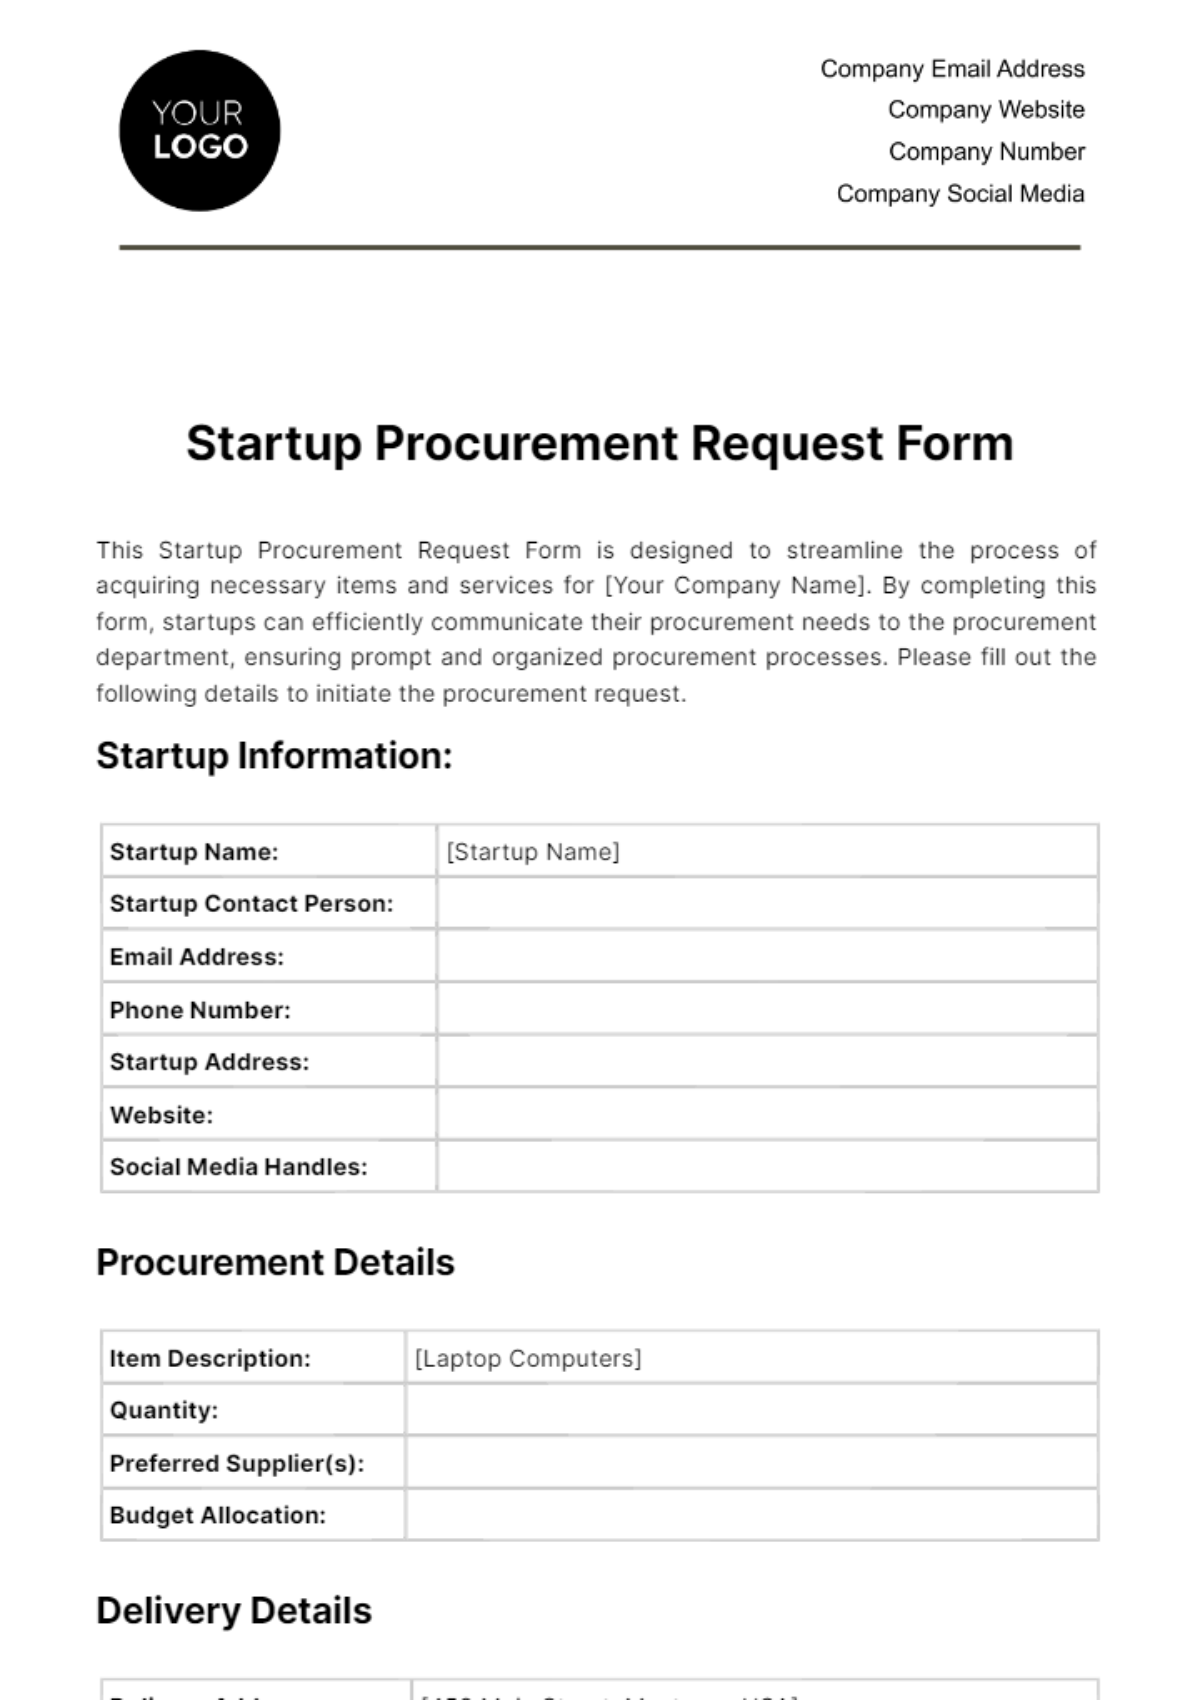 Free Startup Procurement Request Form Template